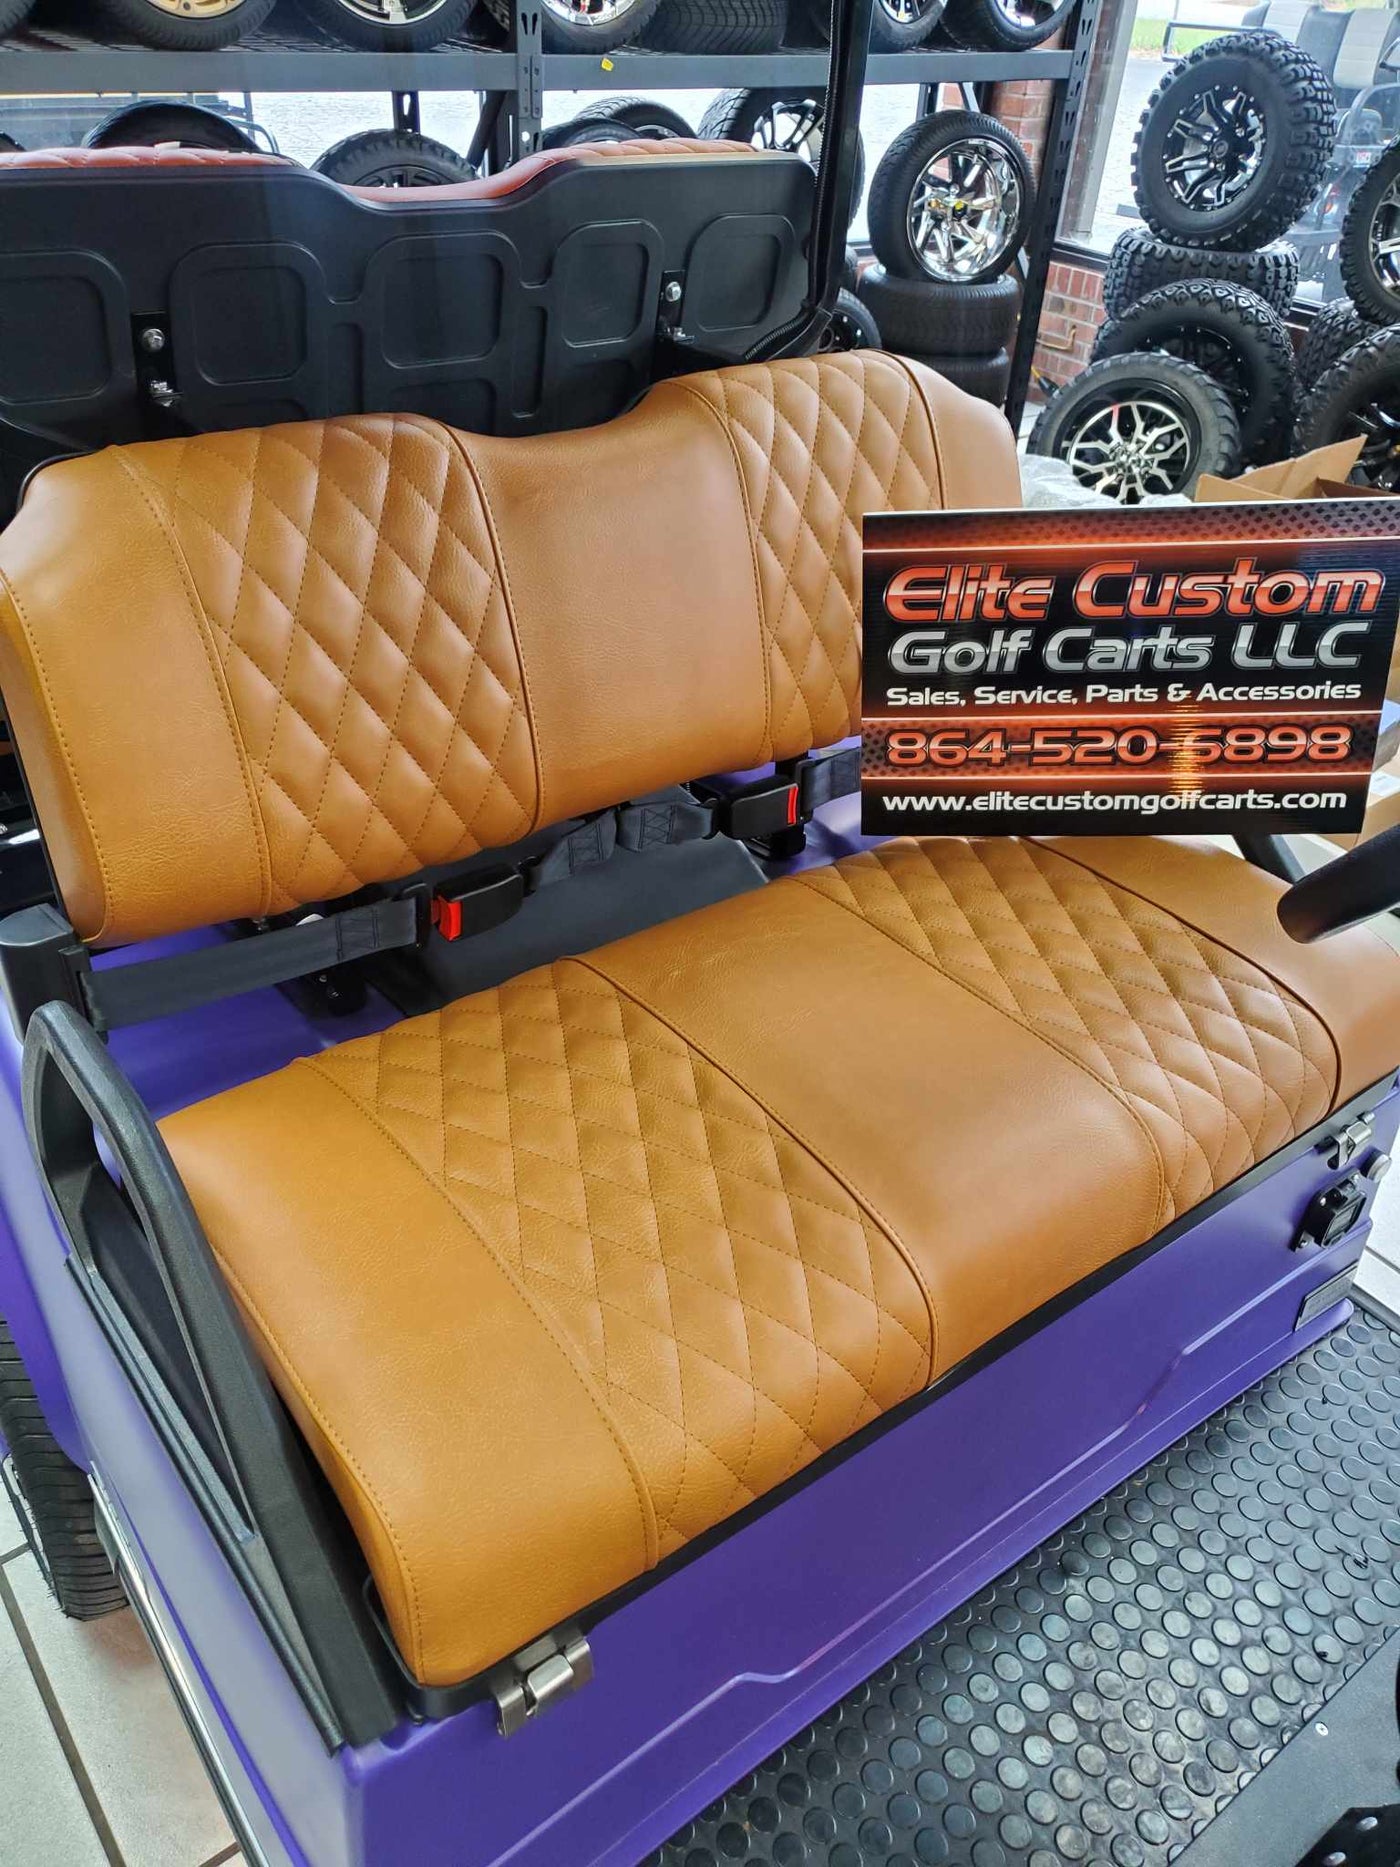 Evolution EV Golf Cart Custom Diamond Stich Seat Covers Peanut Butter Brown Diamond Stich fits Evolutions Classic Pro & Plus, Carrier & Forester Models